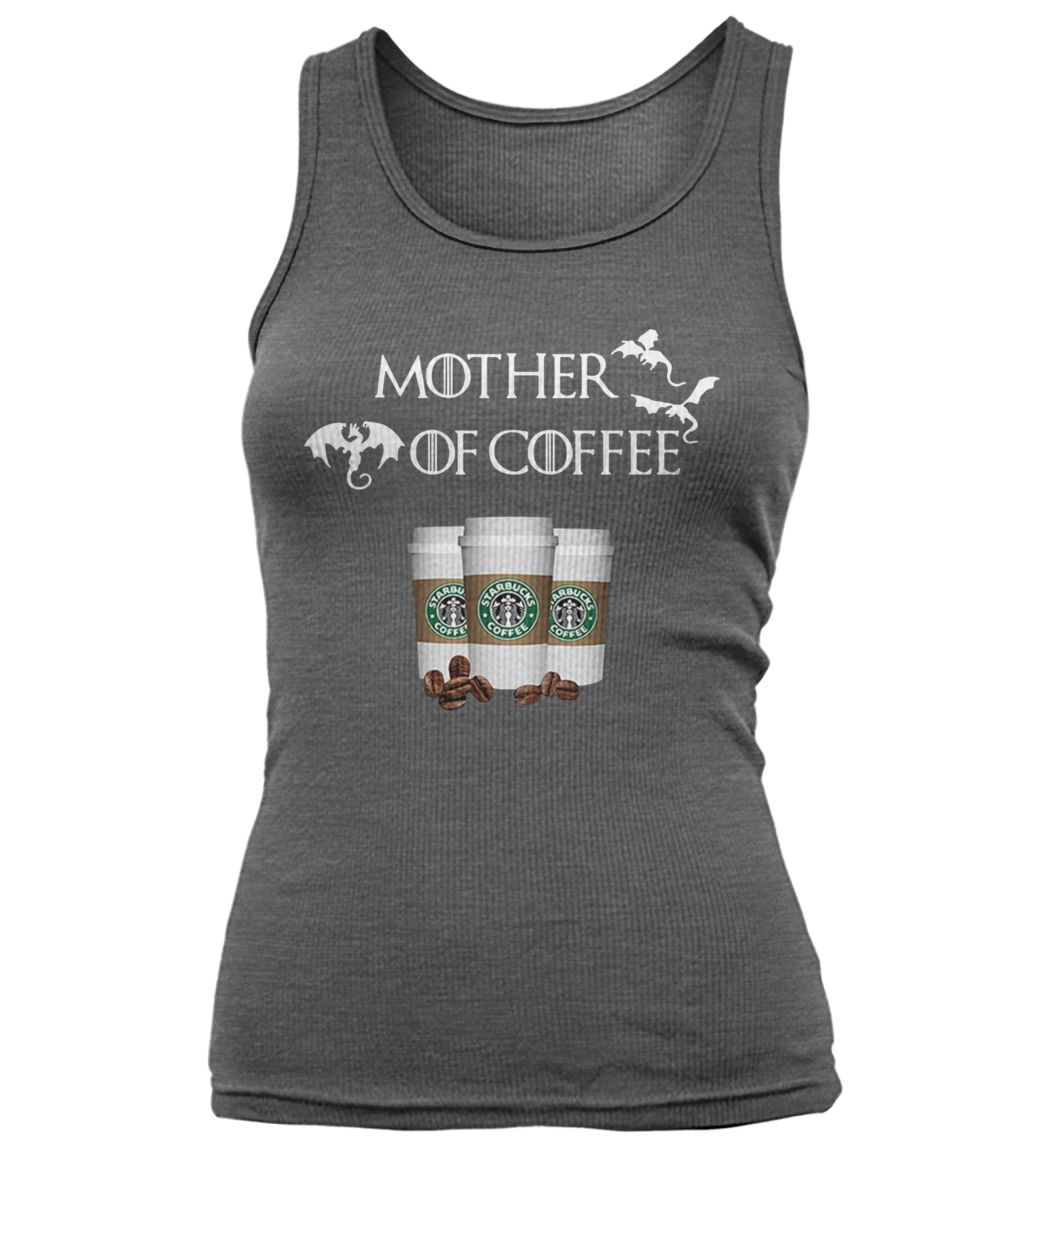 Starbucks mother of coffee game of thrones women's tank top